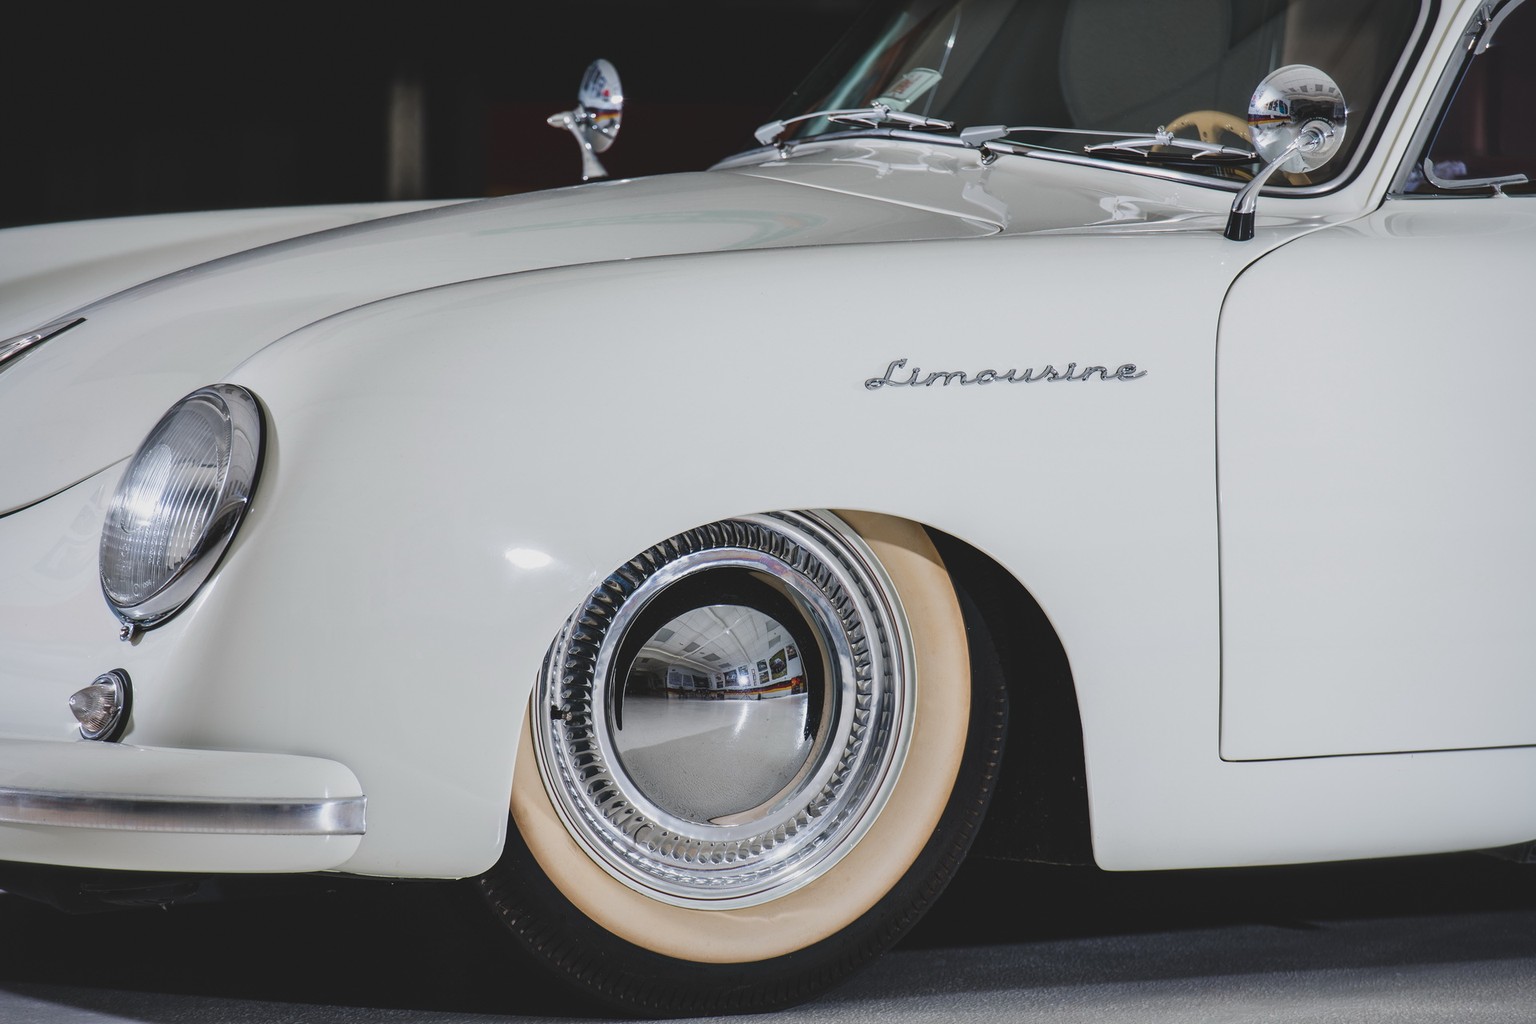 1953 Porsche 356 Limousine Custom
Offered without reserve
RM | Sotheby&#039;s - THE TAJ MA GARAJ COLLECTION 28 SEPTEMBER 2019 auktion 

https://rmsothebys.com/en/auctions/tg19/the-taj-ma-garaj-collect ...